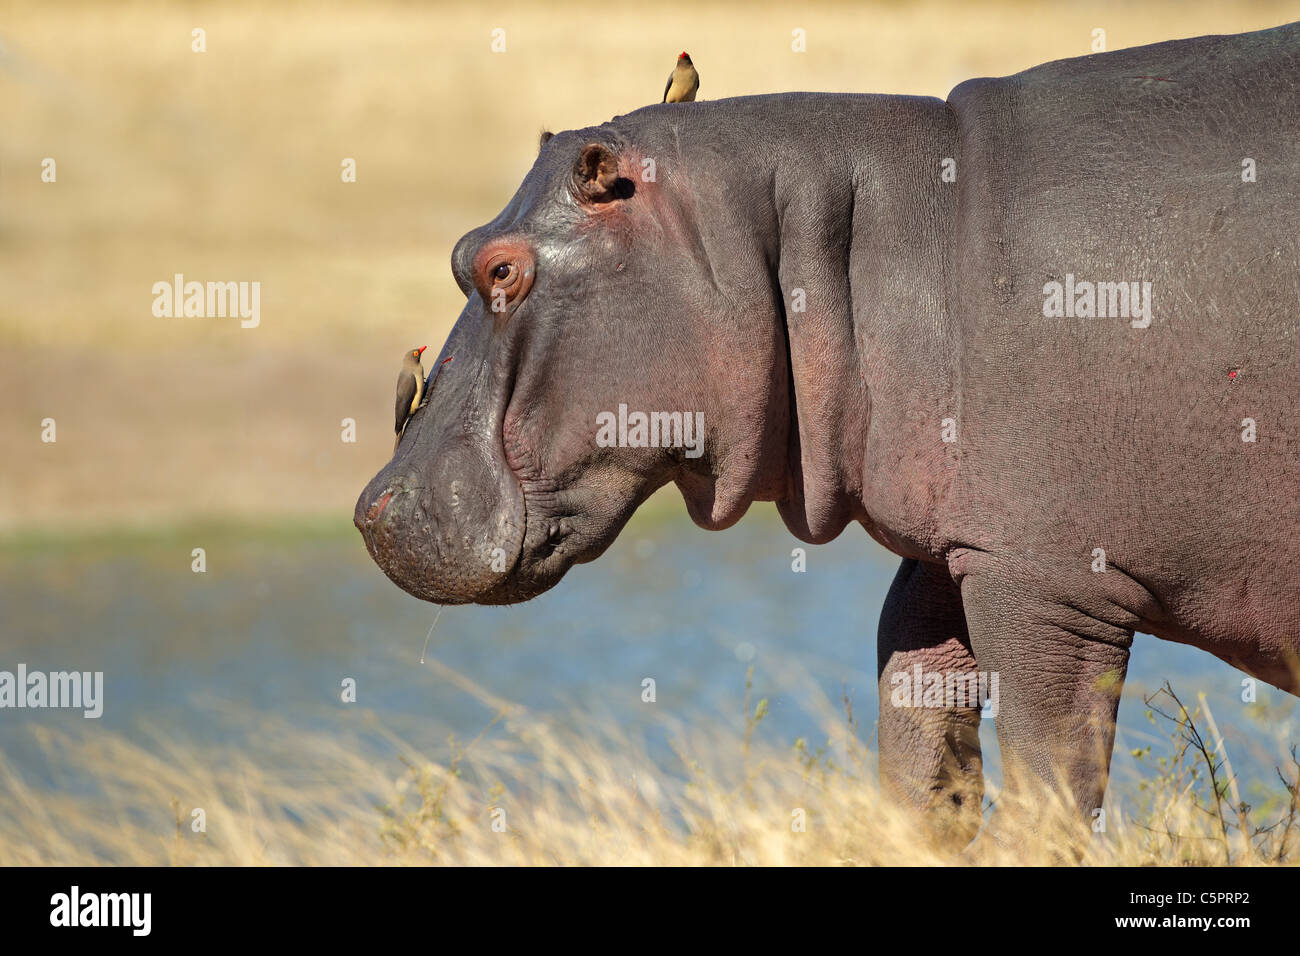 Hippopotamus (Hippopotamus amphibius) with oxpecker birds, Sabie-Sand nature reserve, South Africa Stock Photo